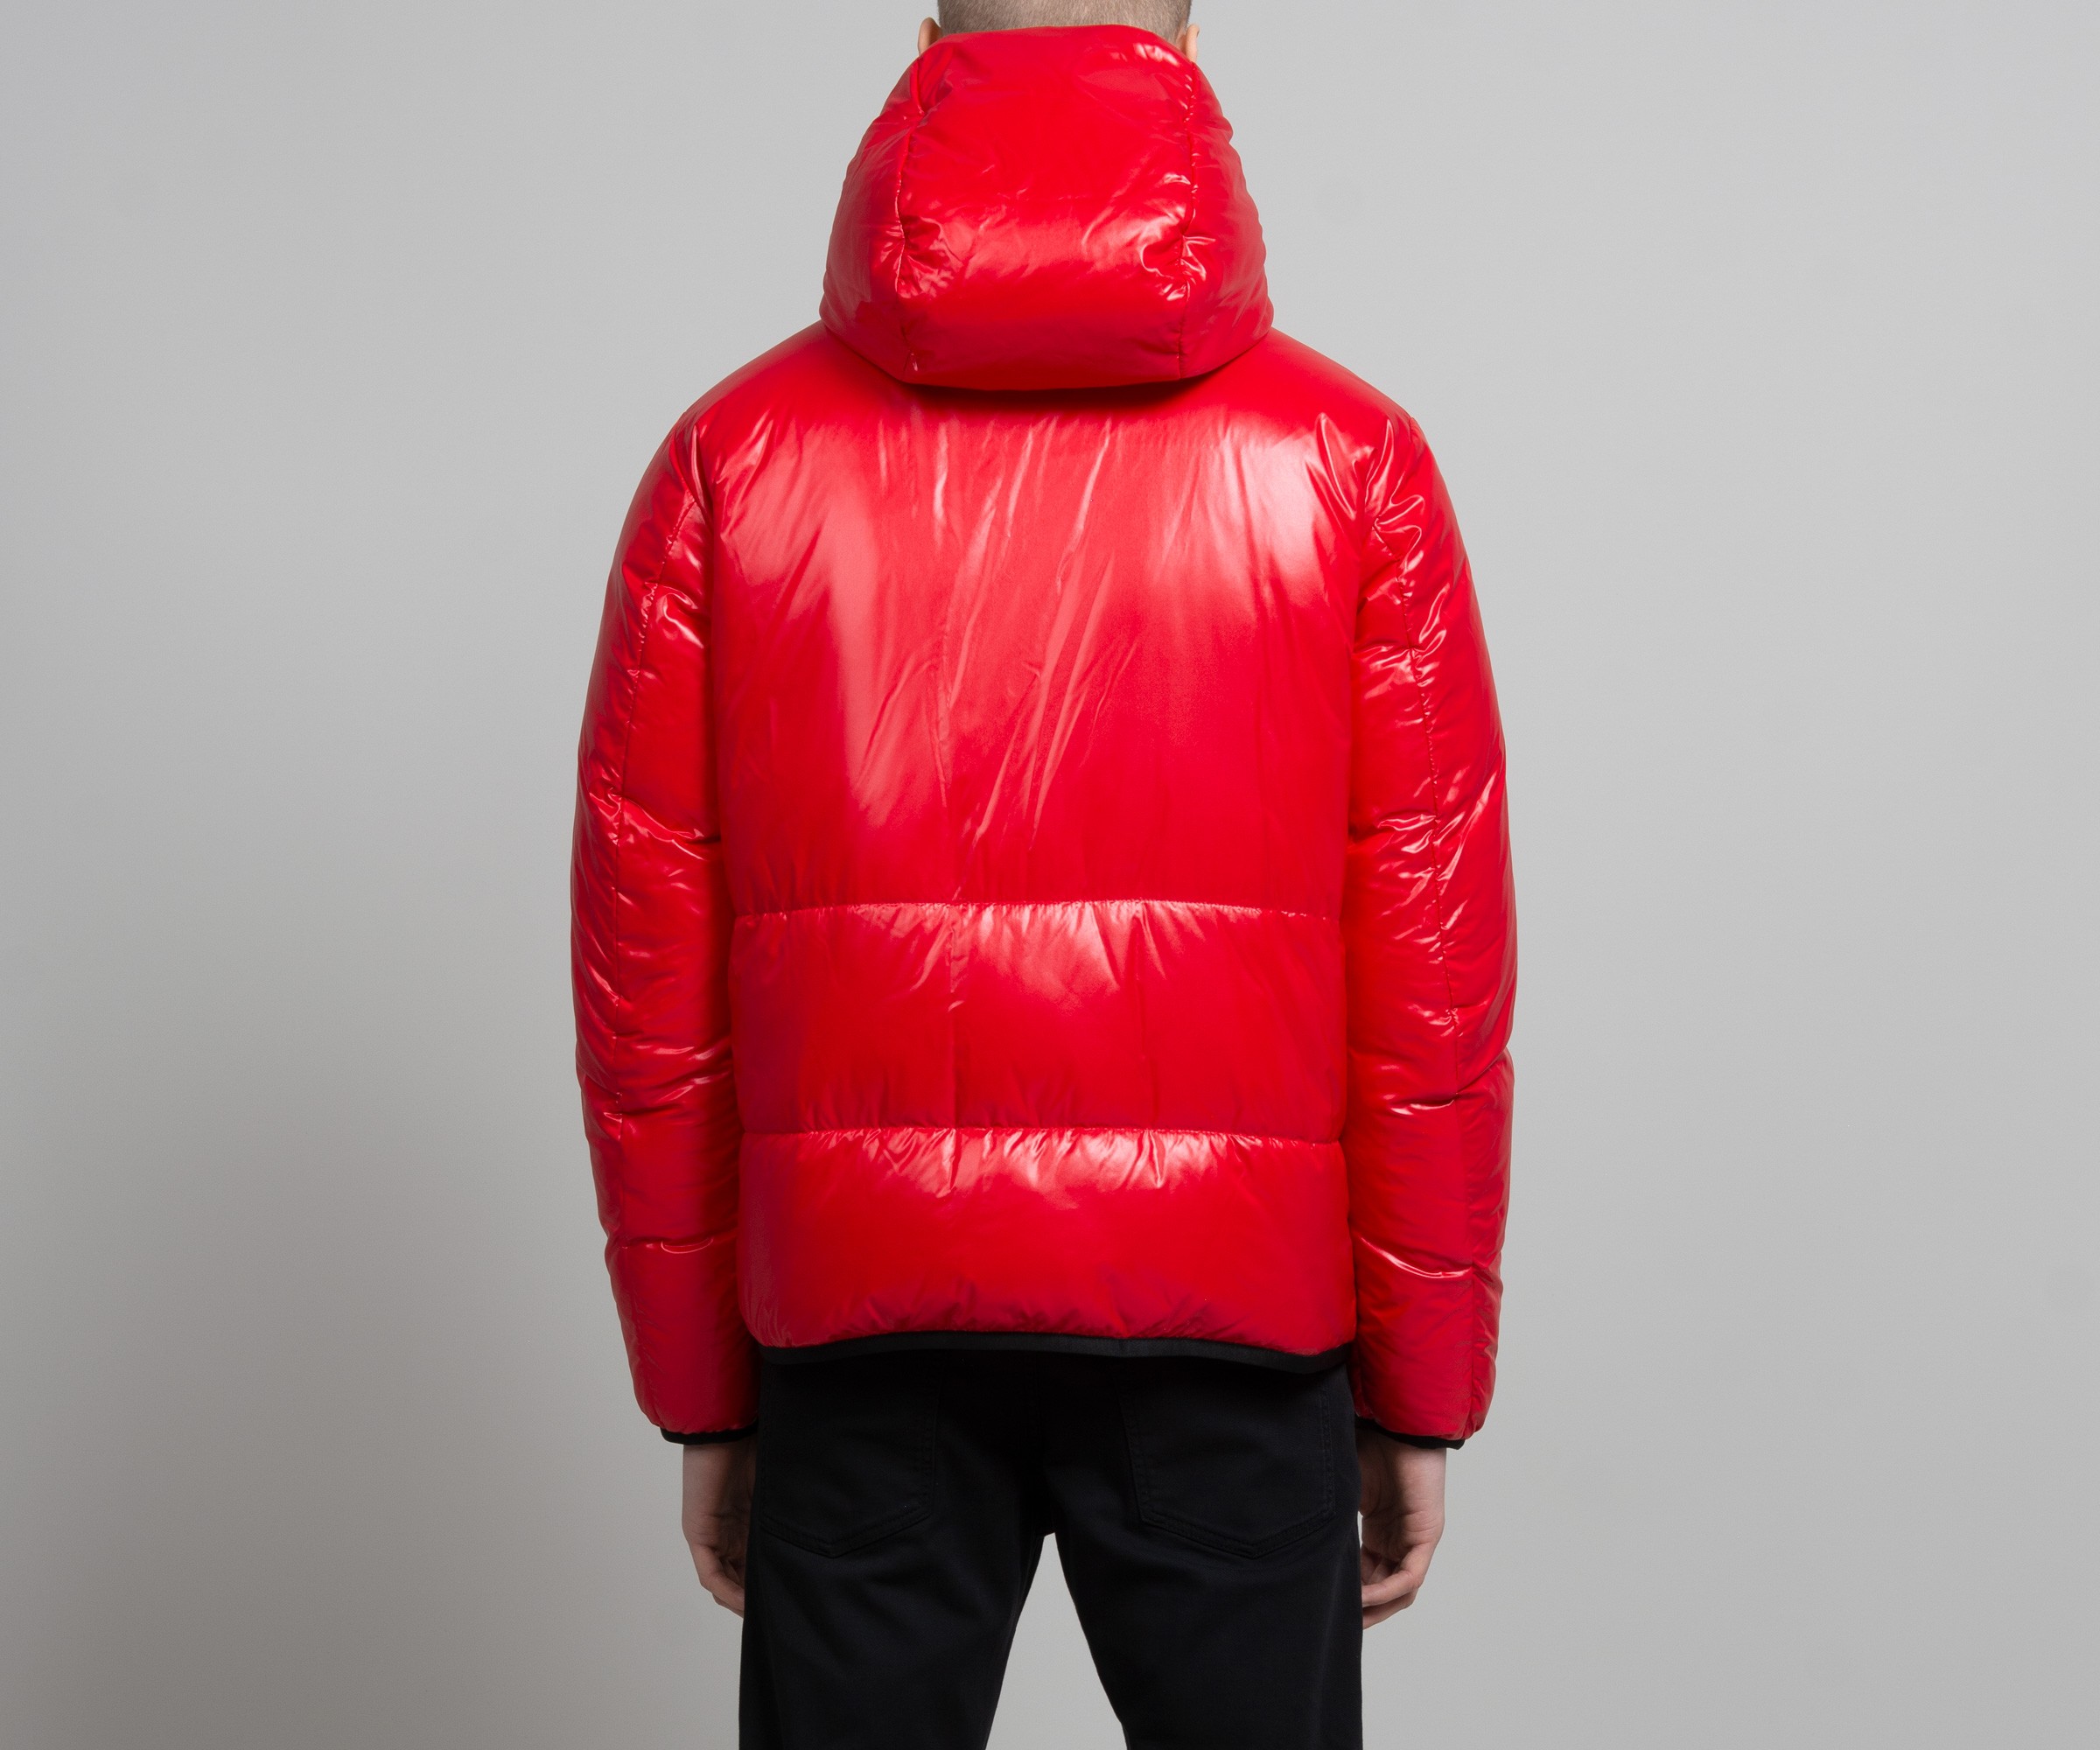 Moncler 'Lumiere Giubbotto' Reversible Jacket Black/Red